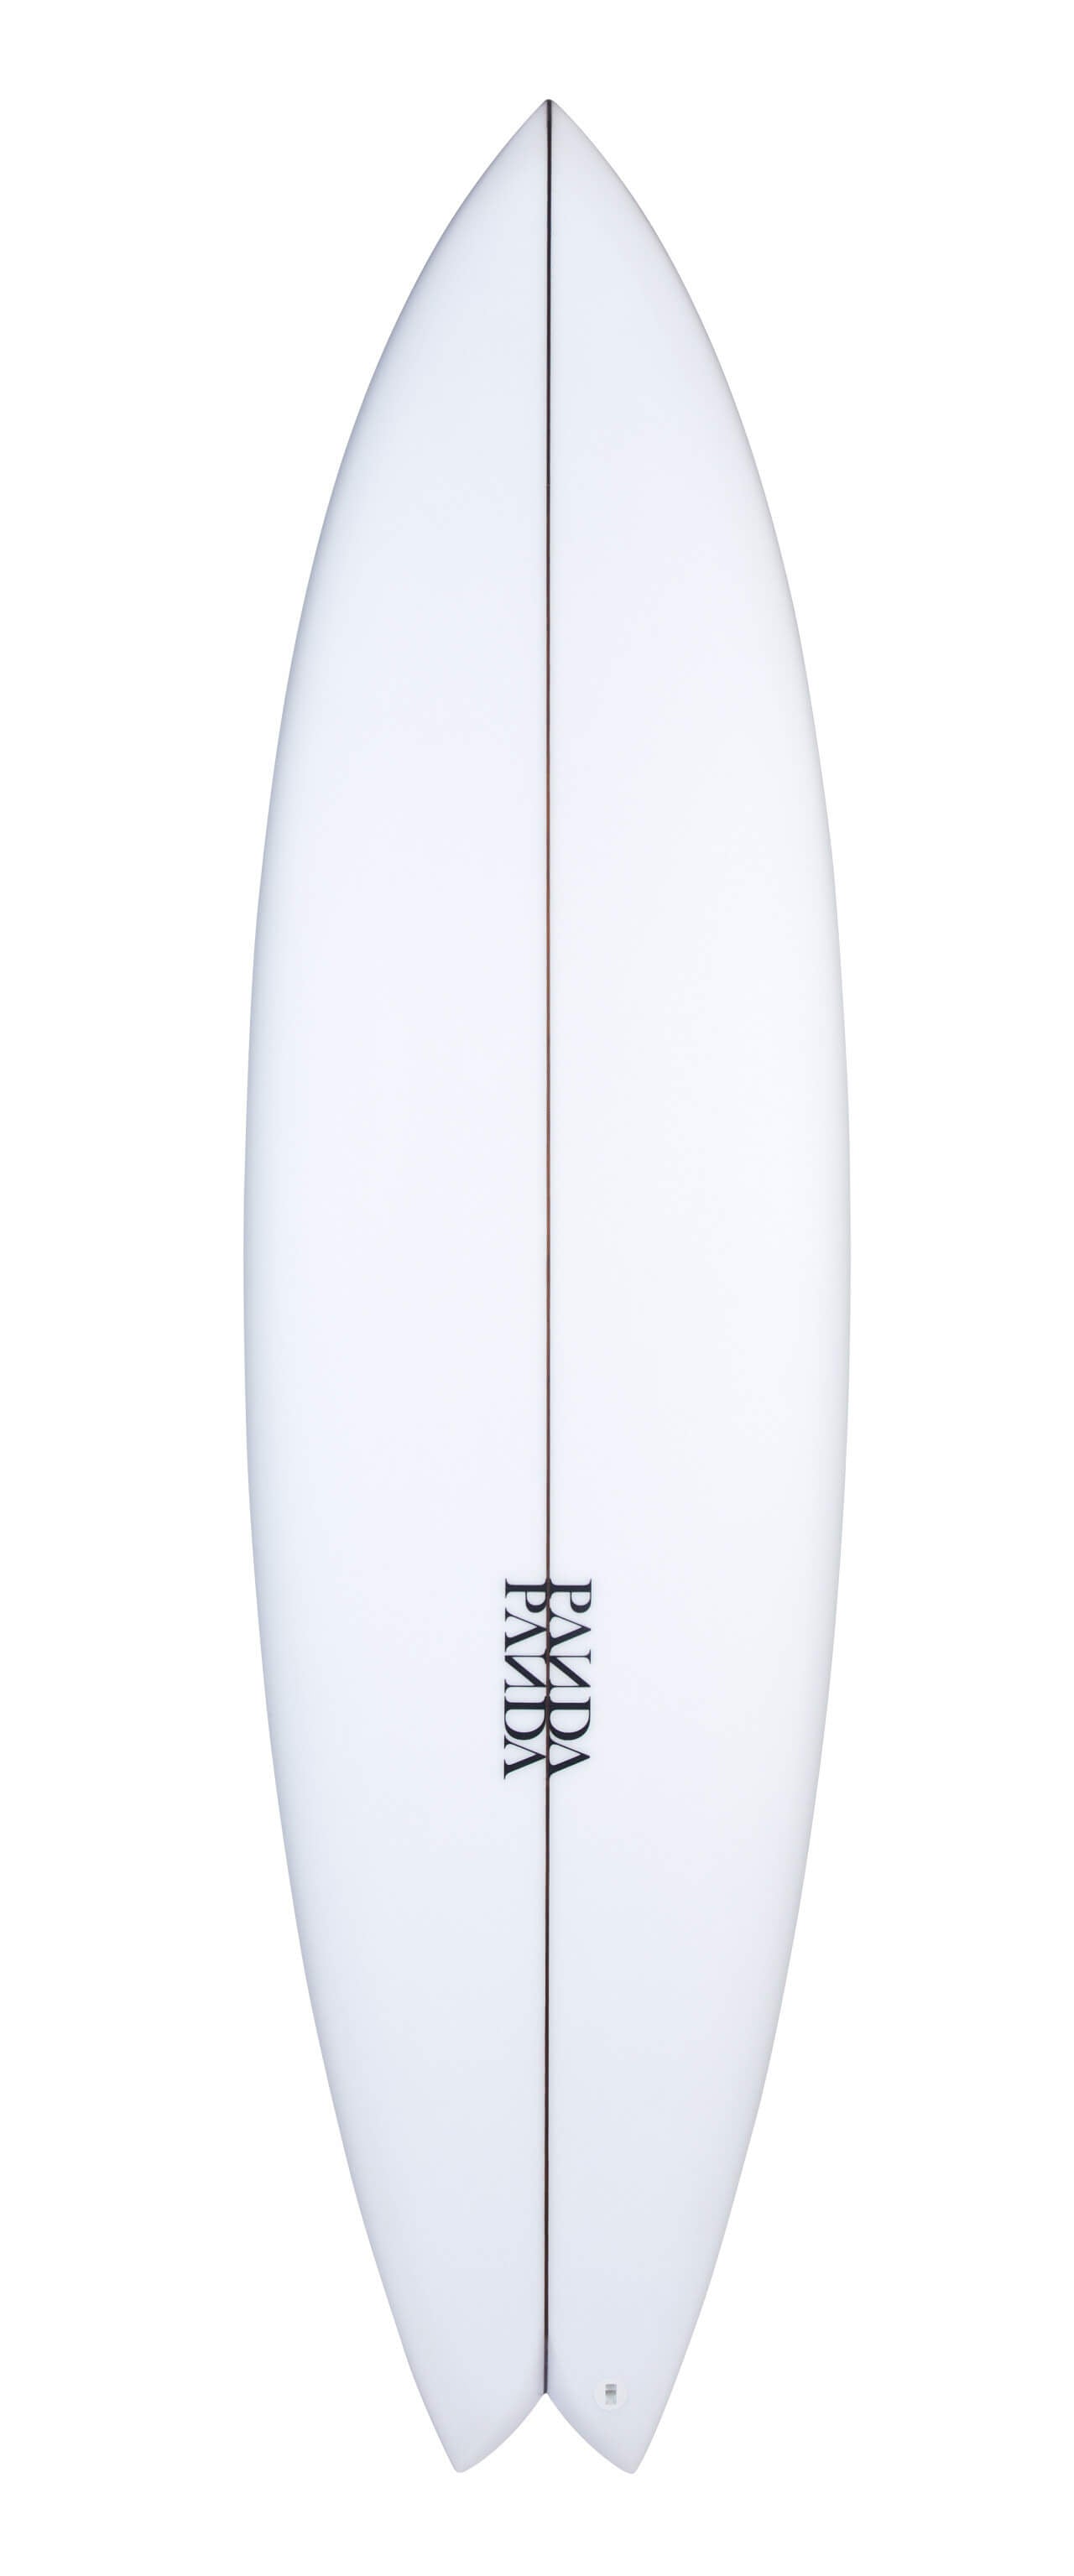 Panda Surfboards Shiitake custom order 2